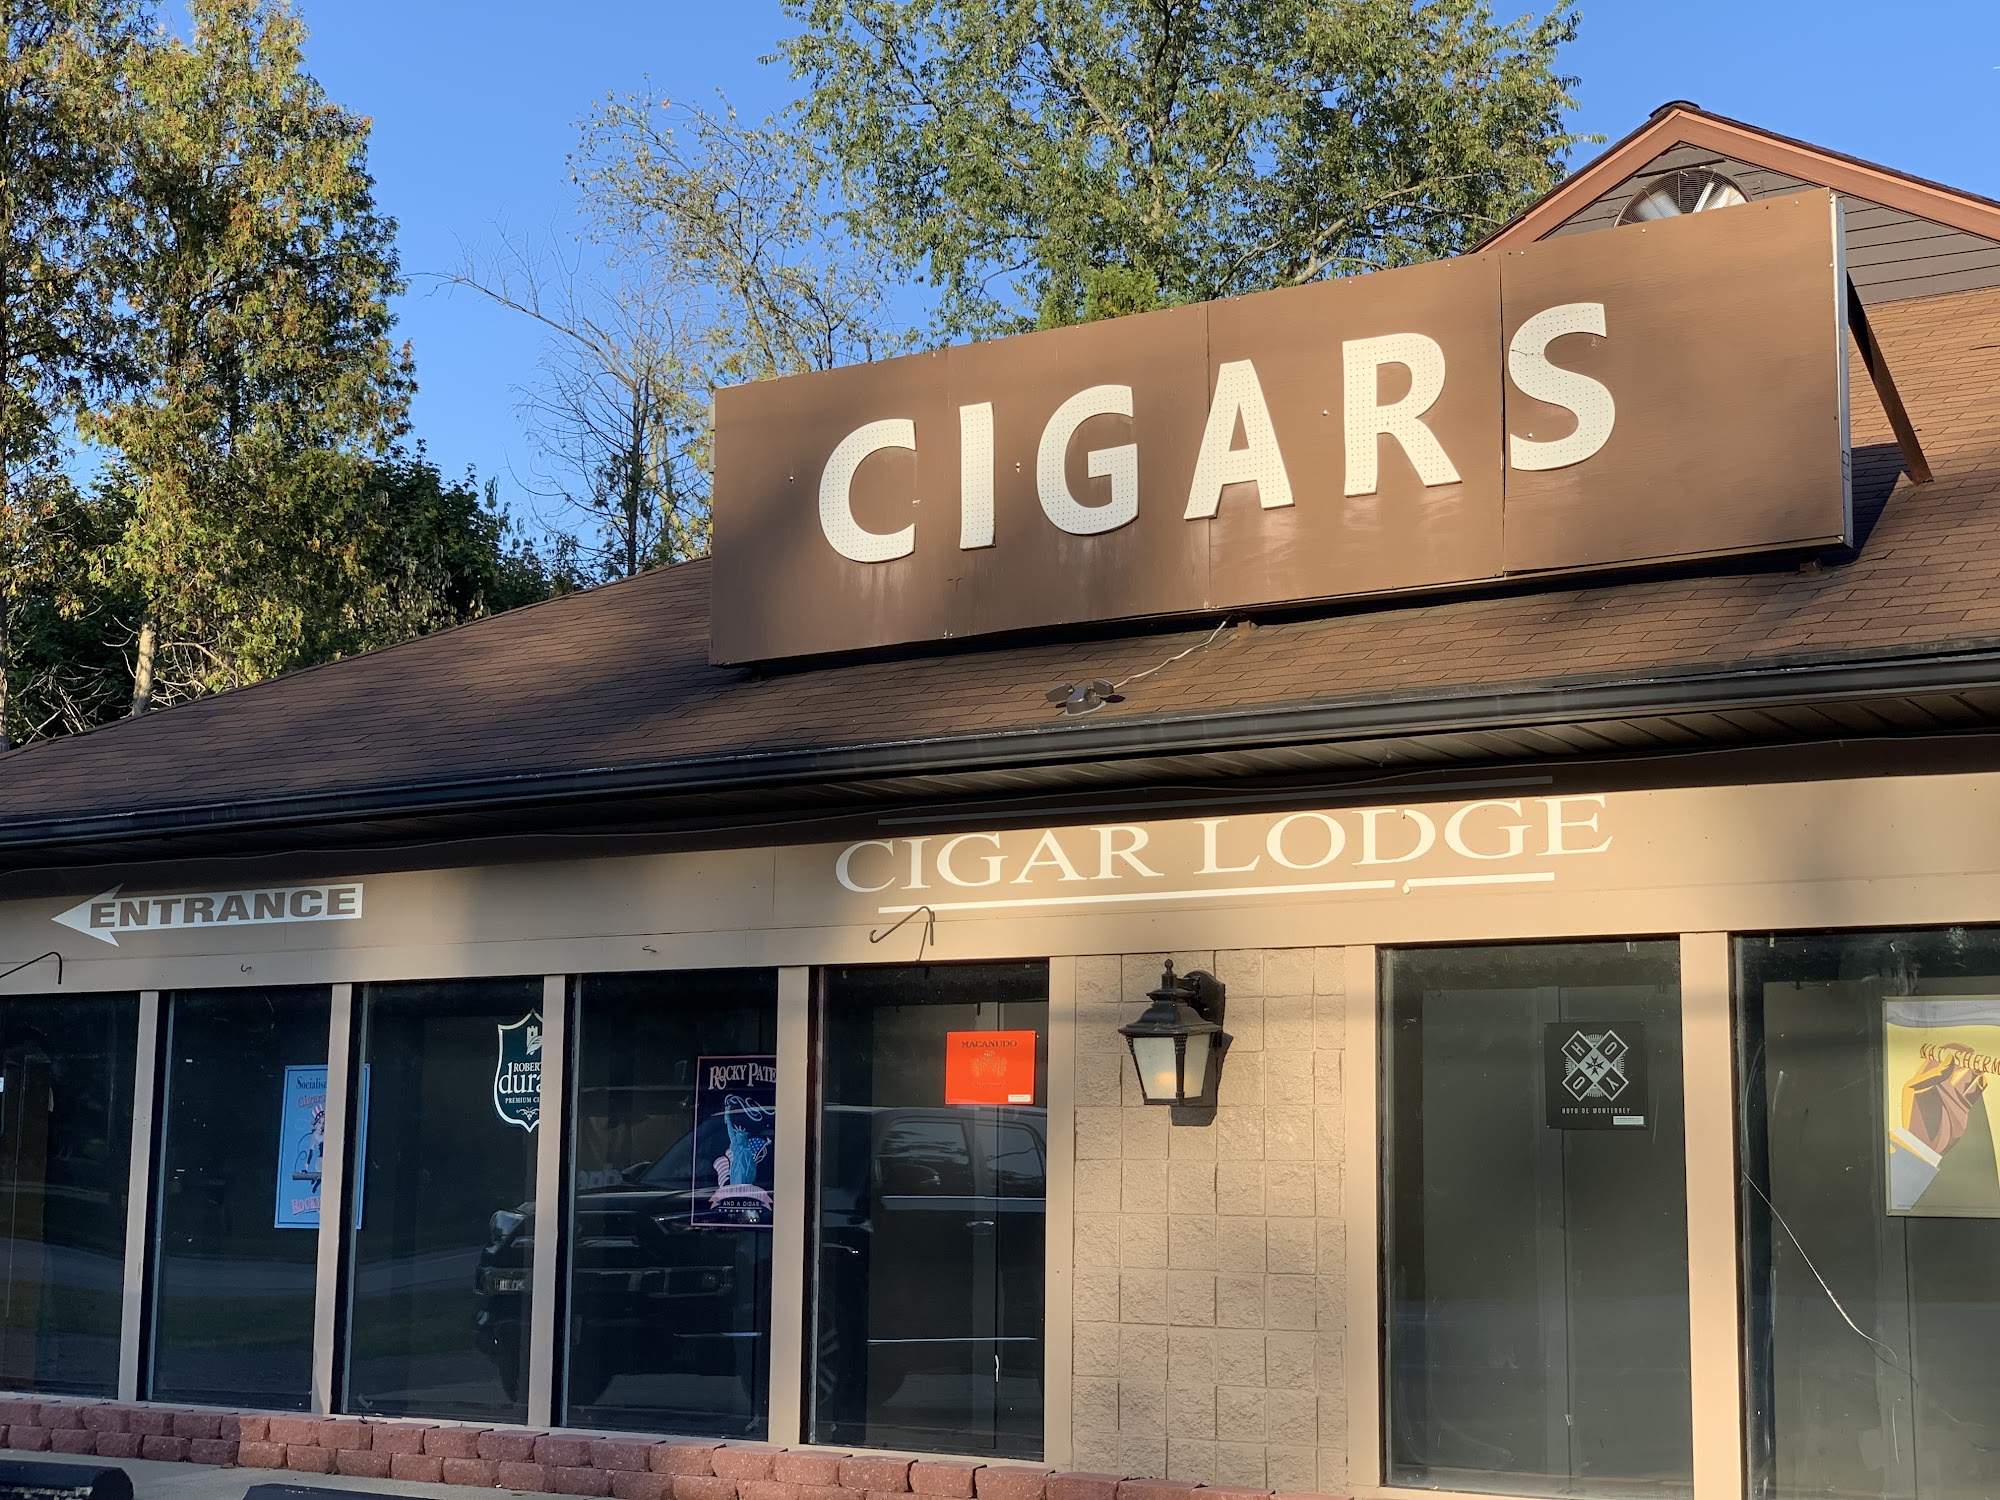 The Cigar Lodge